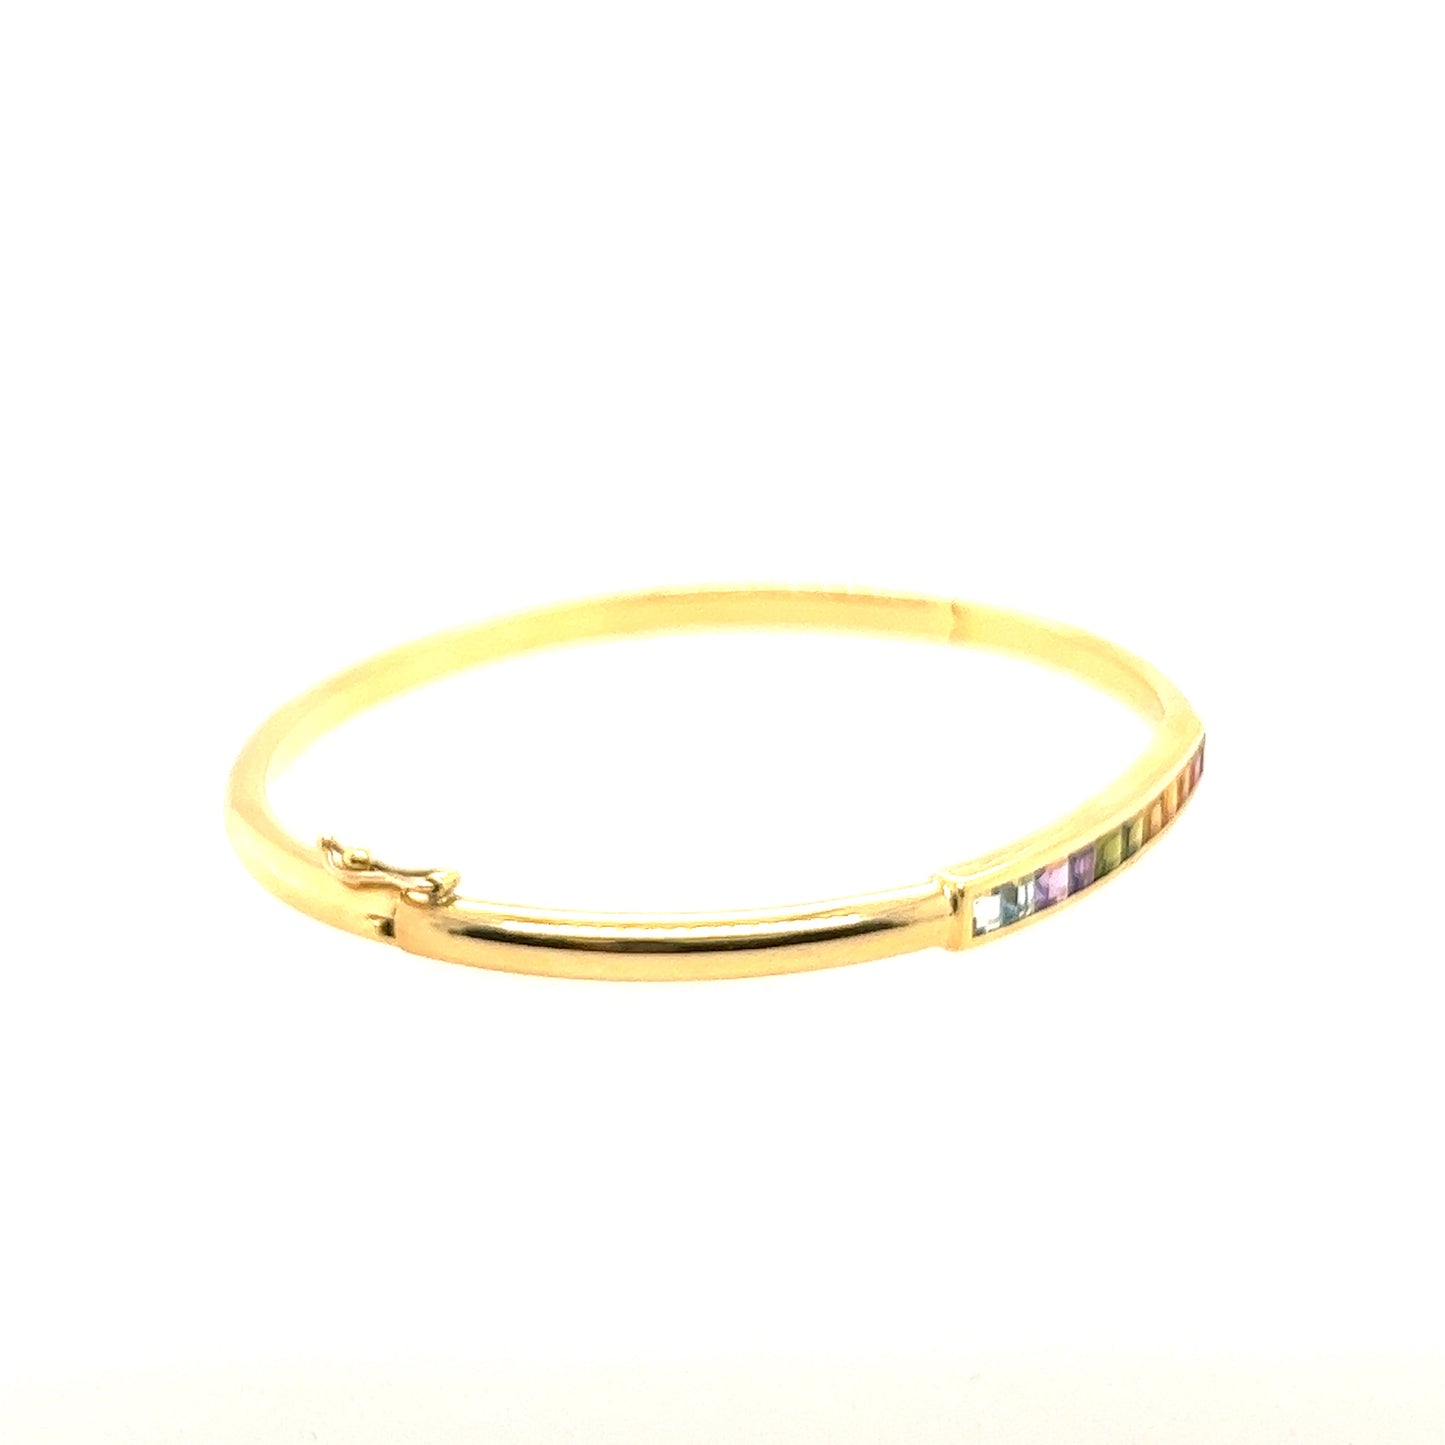 18K Yellow Gold Bangle bracelet with multi color gemstone, very elegant pice.